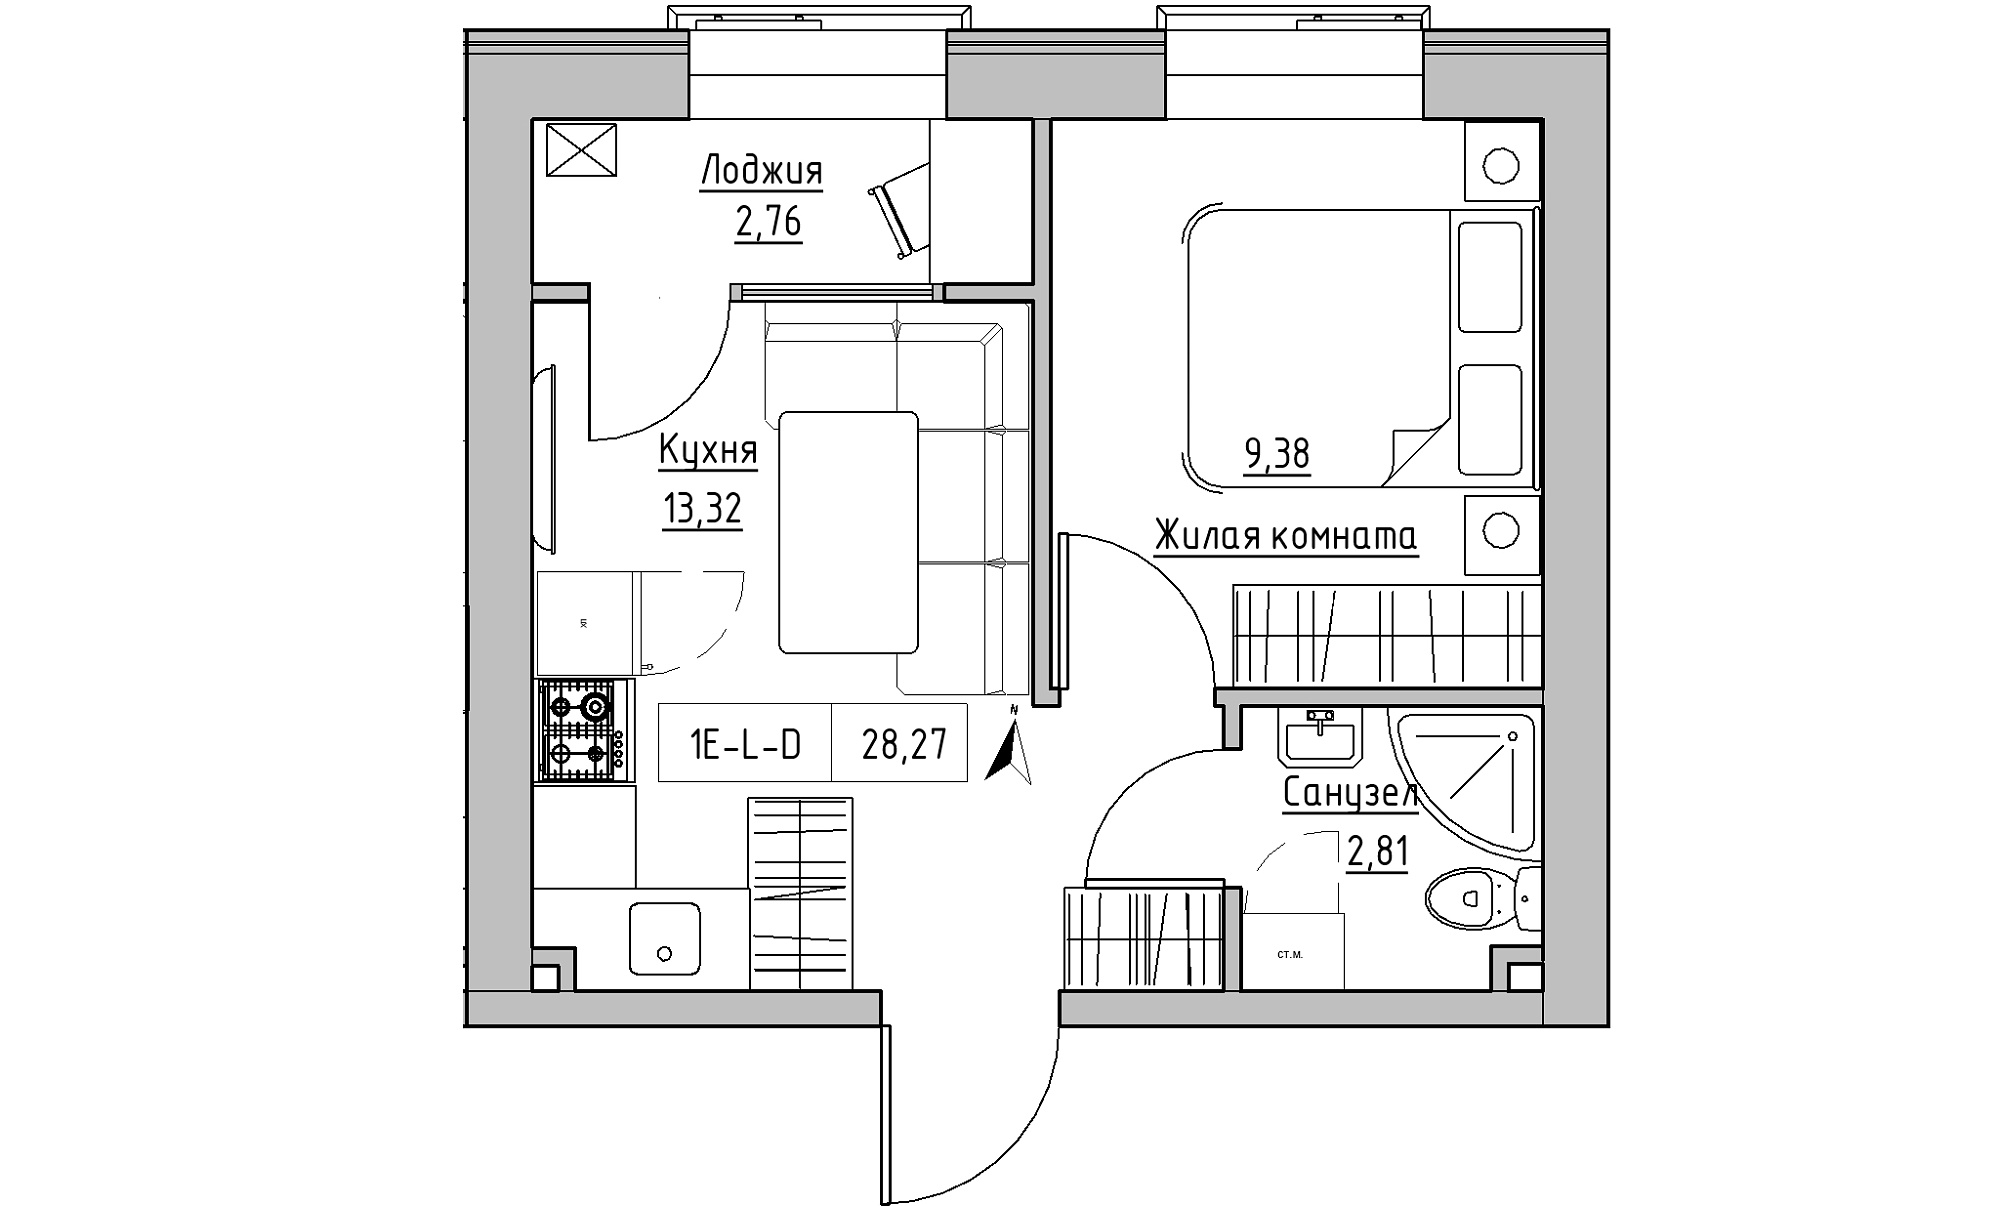 Planning 1-rm flats area 28.27m2, KS-023-04/0017.